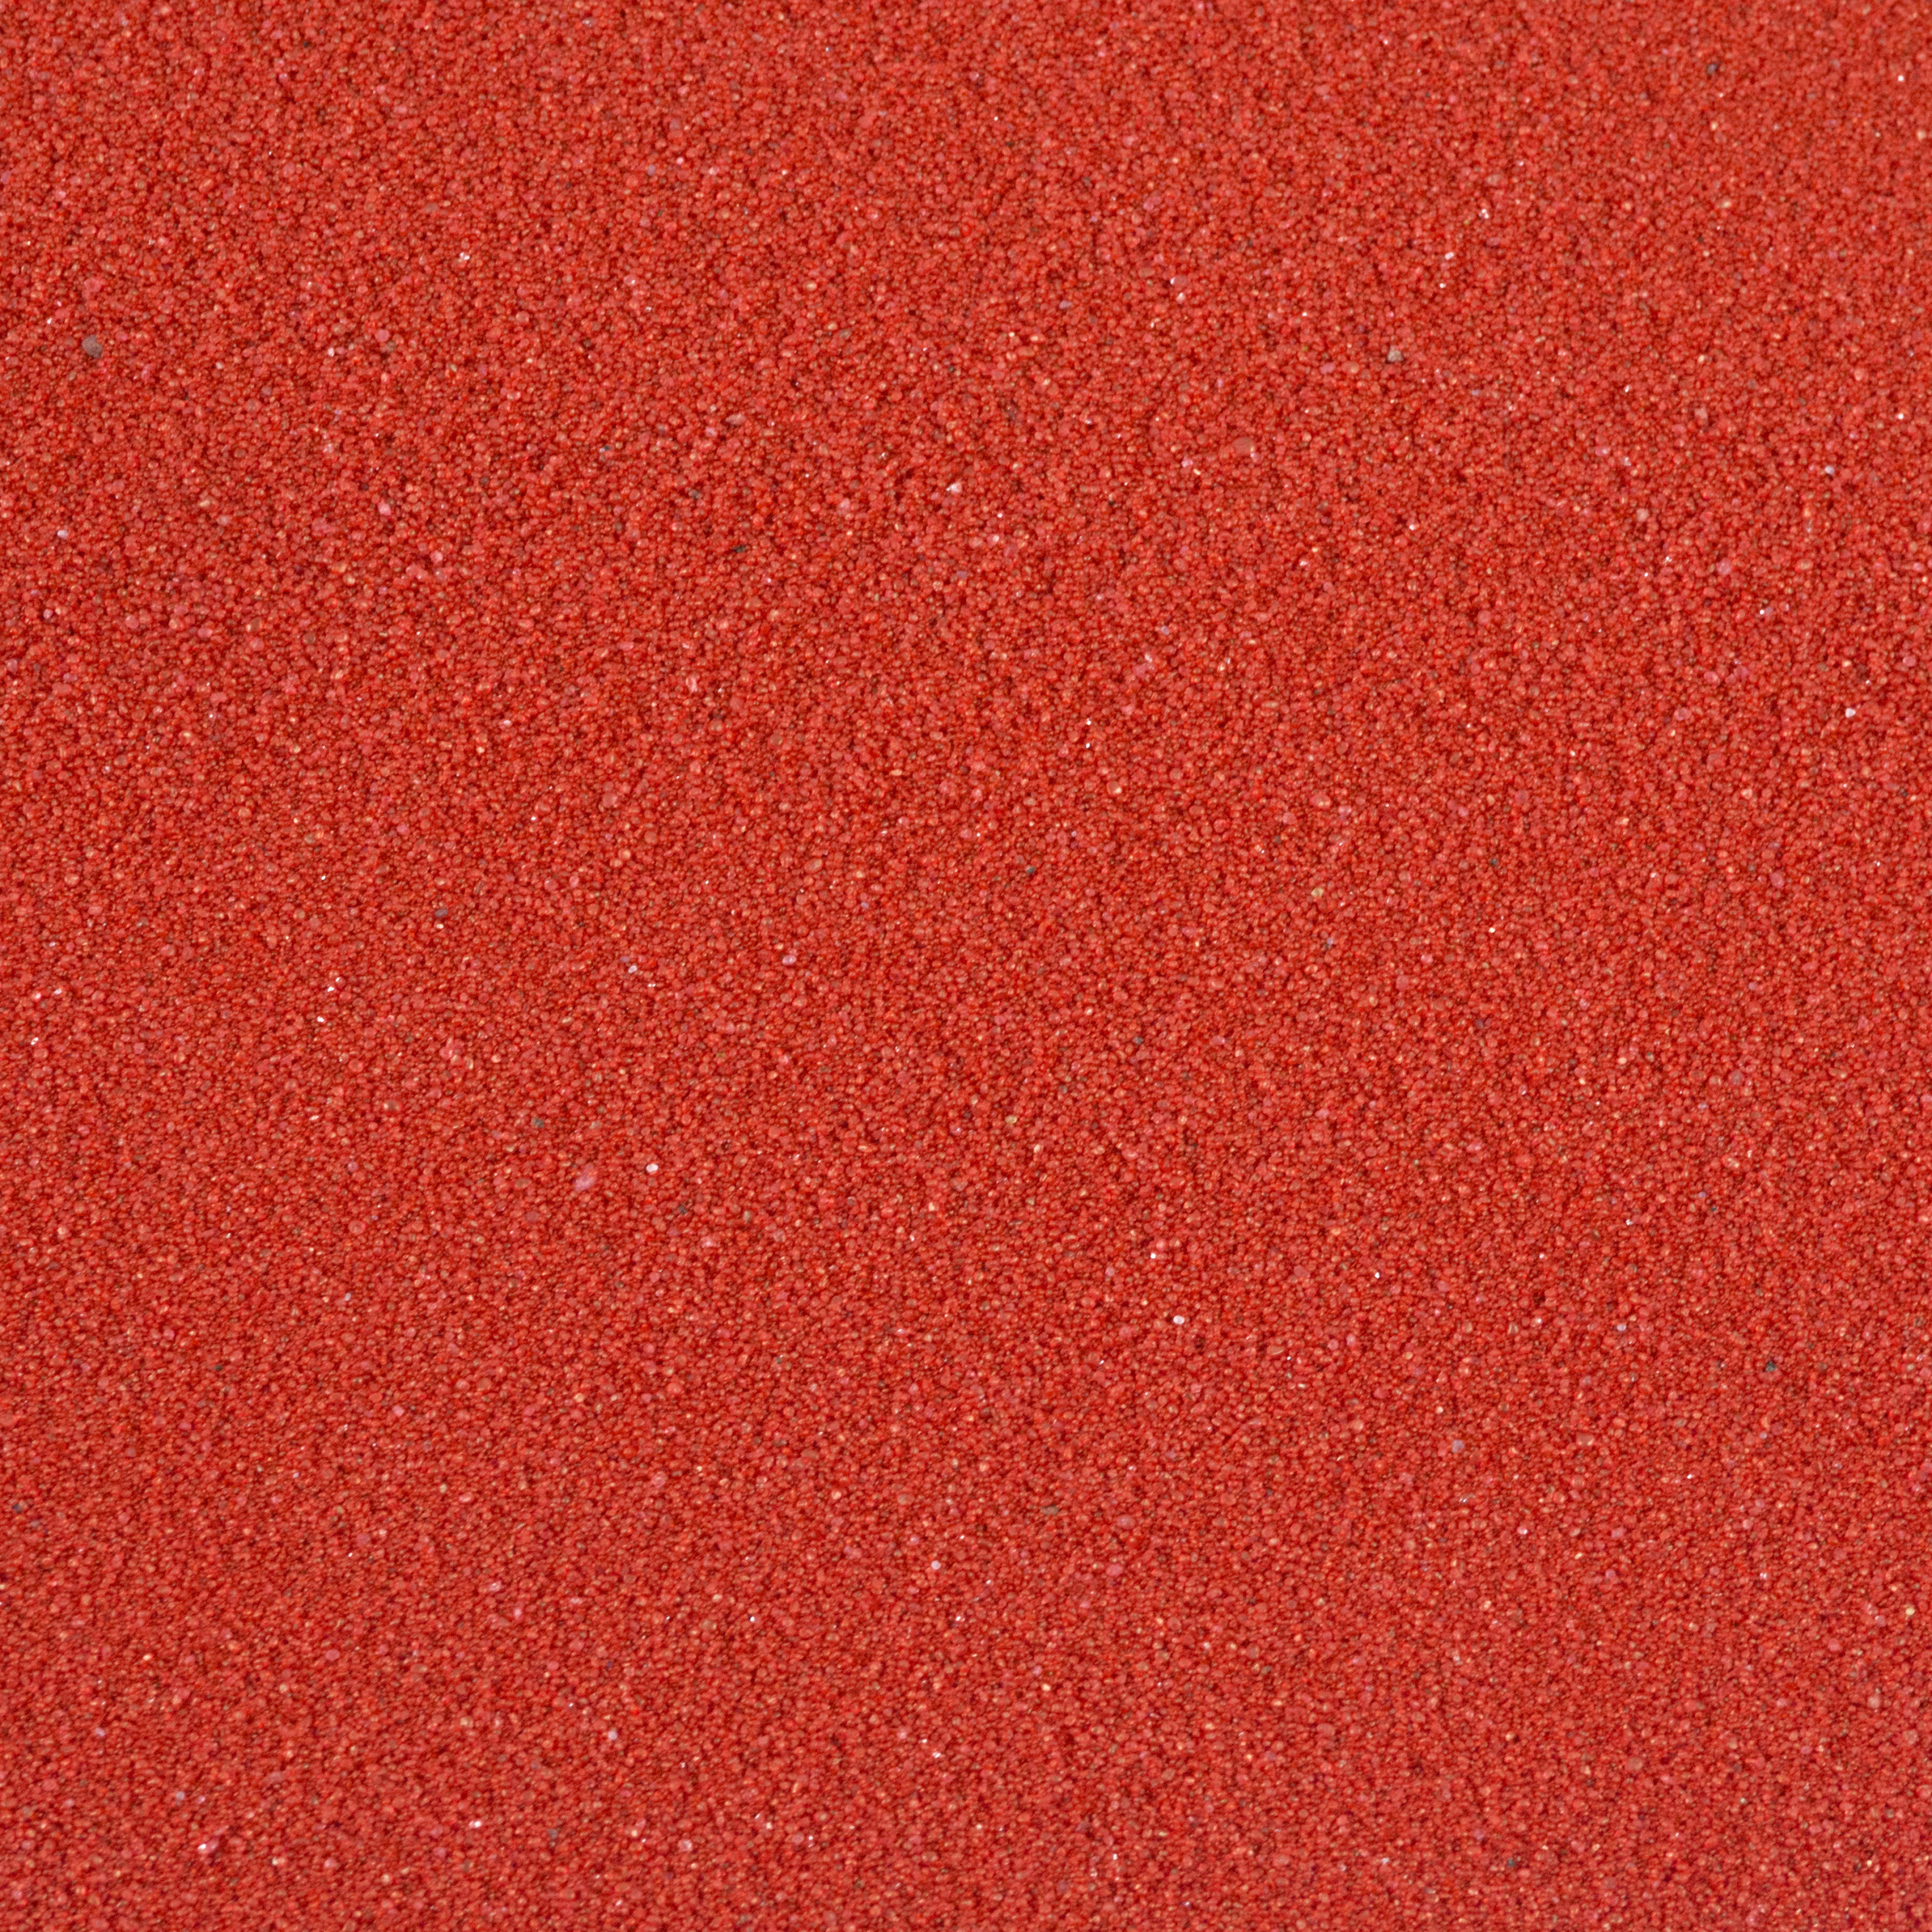 Activa Scenic Sand, 1 lb., Bright Red - image 2 of 2